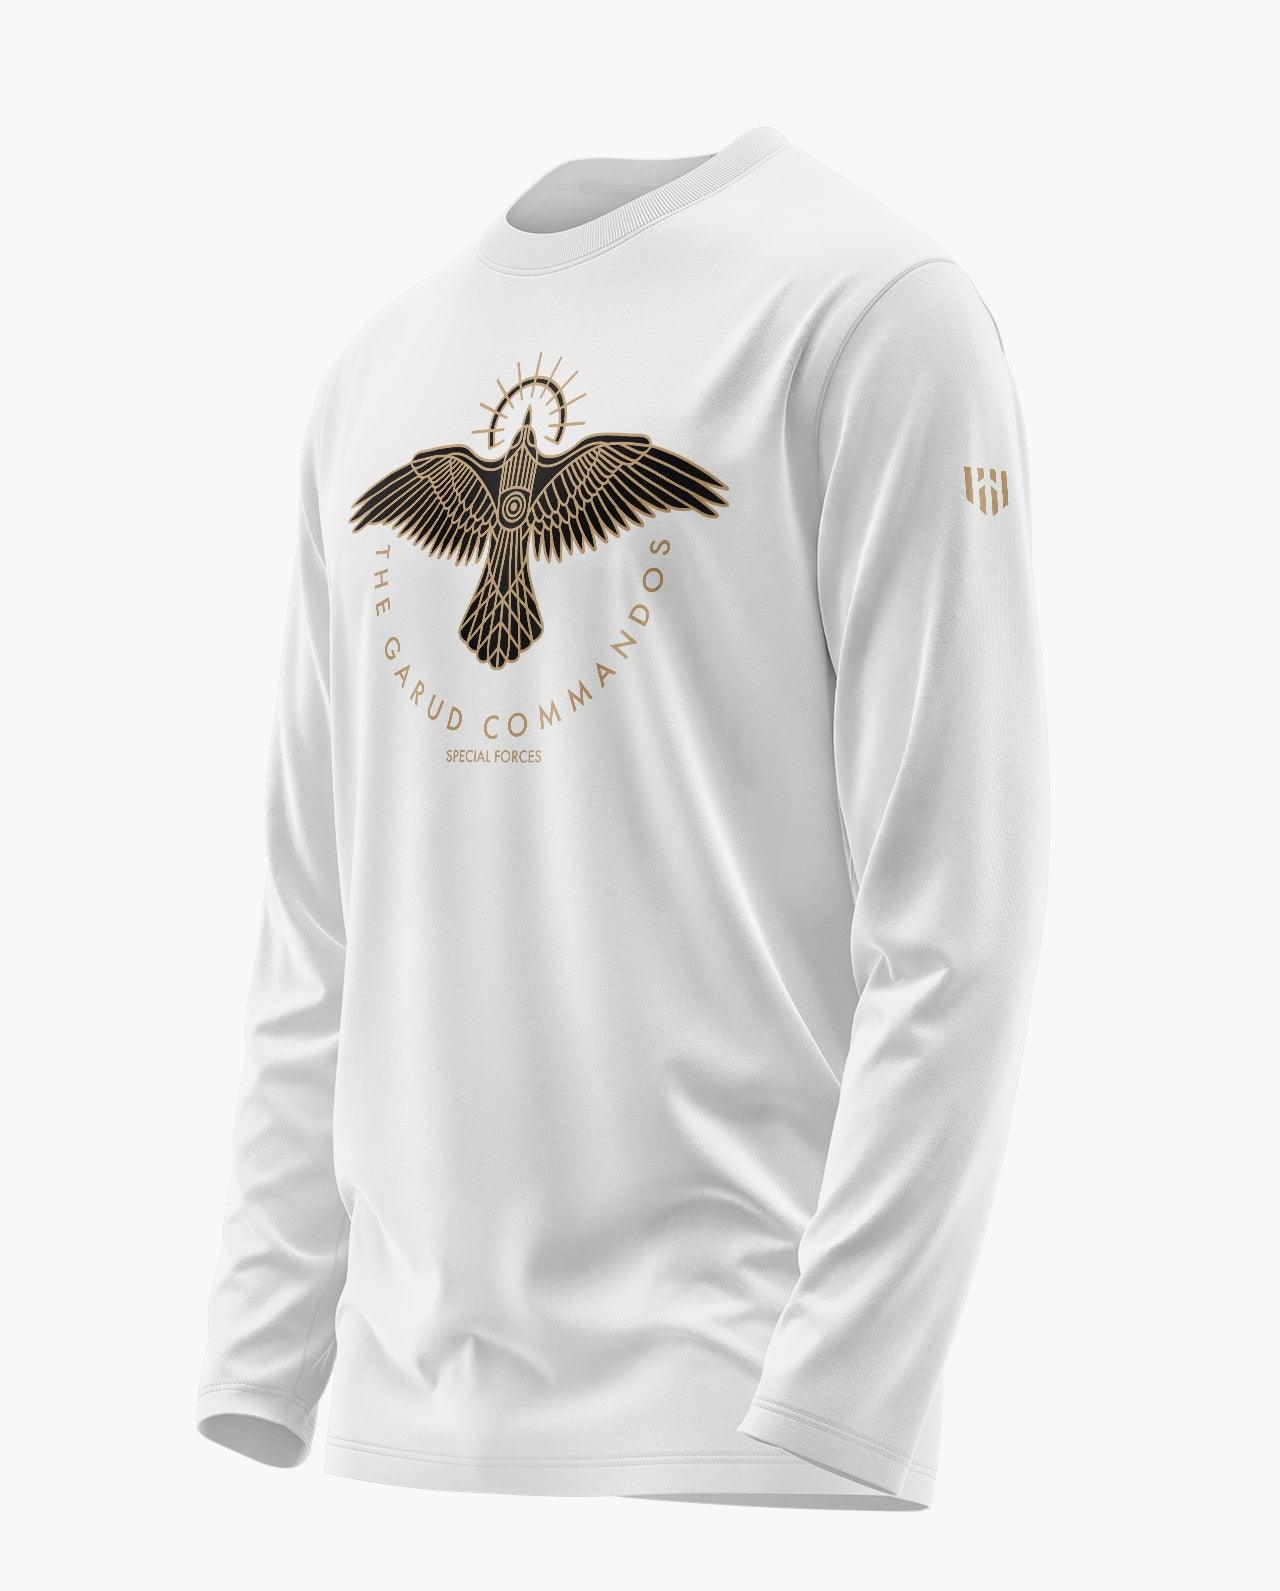 Garud Commandos SF Full Sleeve T-Shirt exclusive at Aero Armour